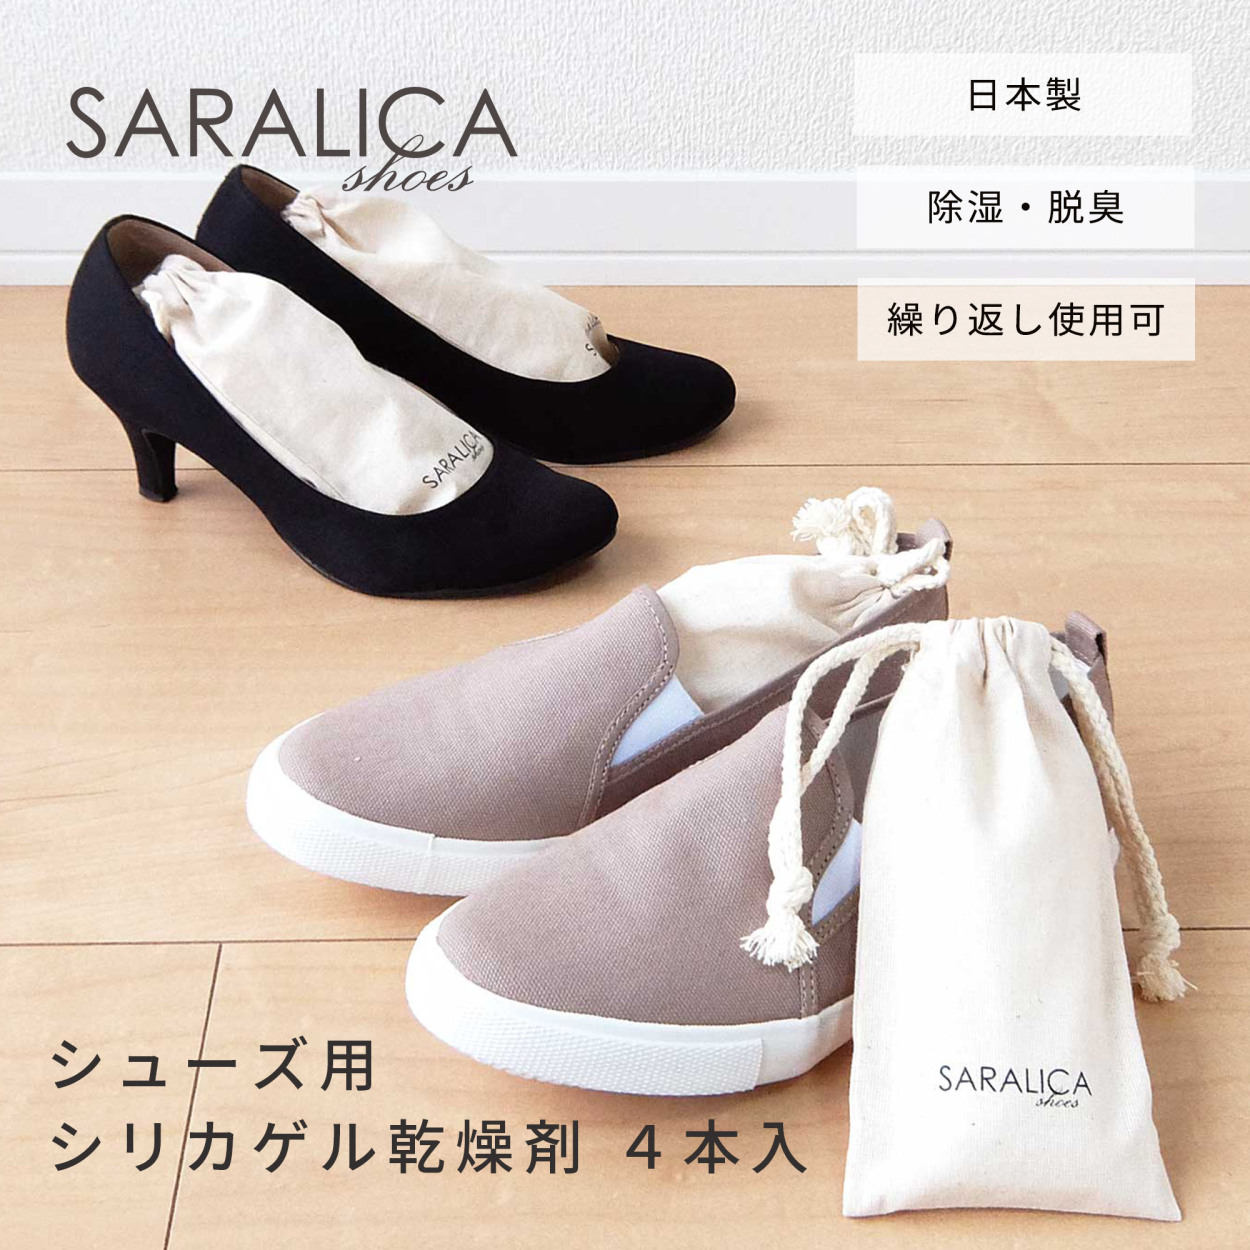 SARALICA サラリカ シューズ用 シリカゲル乾燥剤 4本セット 除湿 除湿剤 靴 シューズ パンプス 革靴 ローファー ショートブーツ 湿気取り  除湿乾燥 スニーカー :srlc-s:Craft Kyoto 通販 